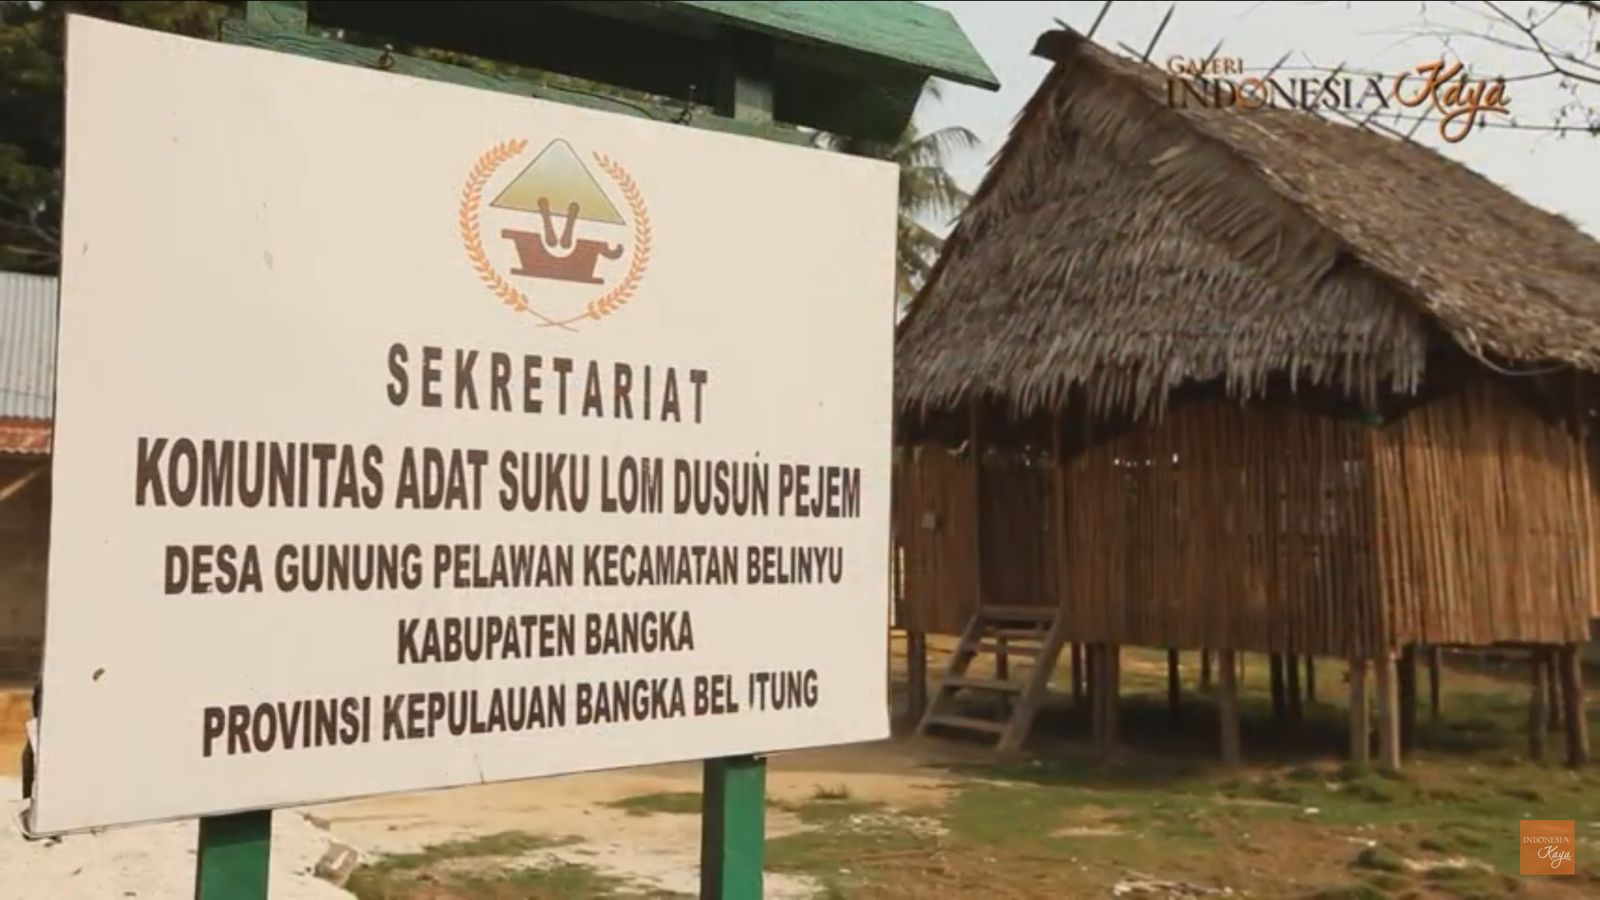 Mengenal 5 Suku Bangsa yang Hidup di Provinsi Kepulauan Bangka Belitung, No 2 Berasal dari Kerajaan Majapahit